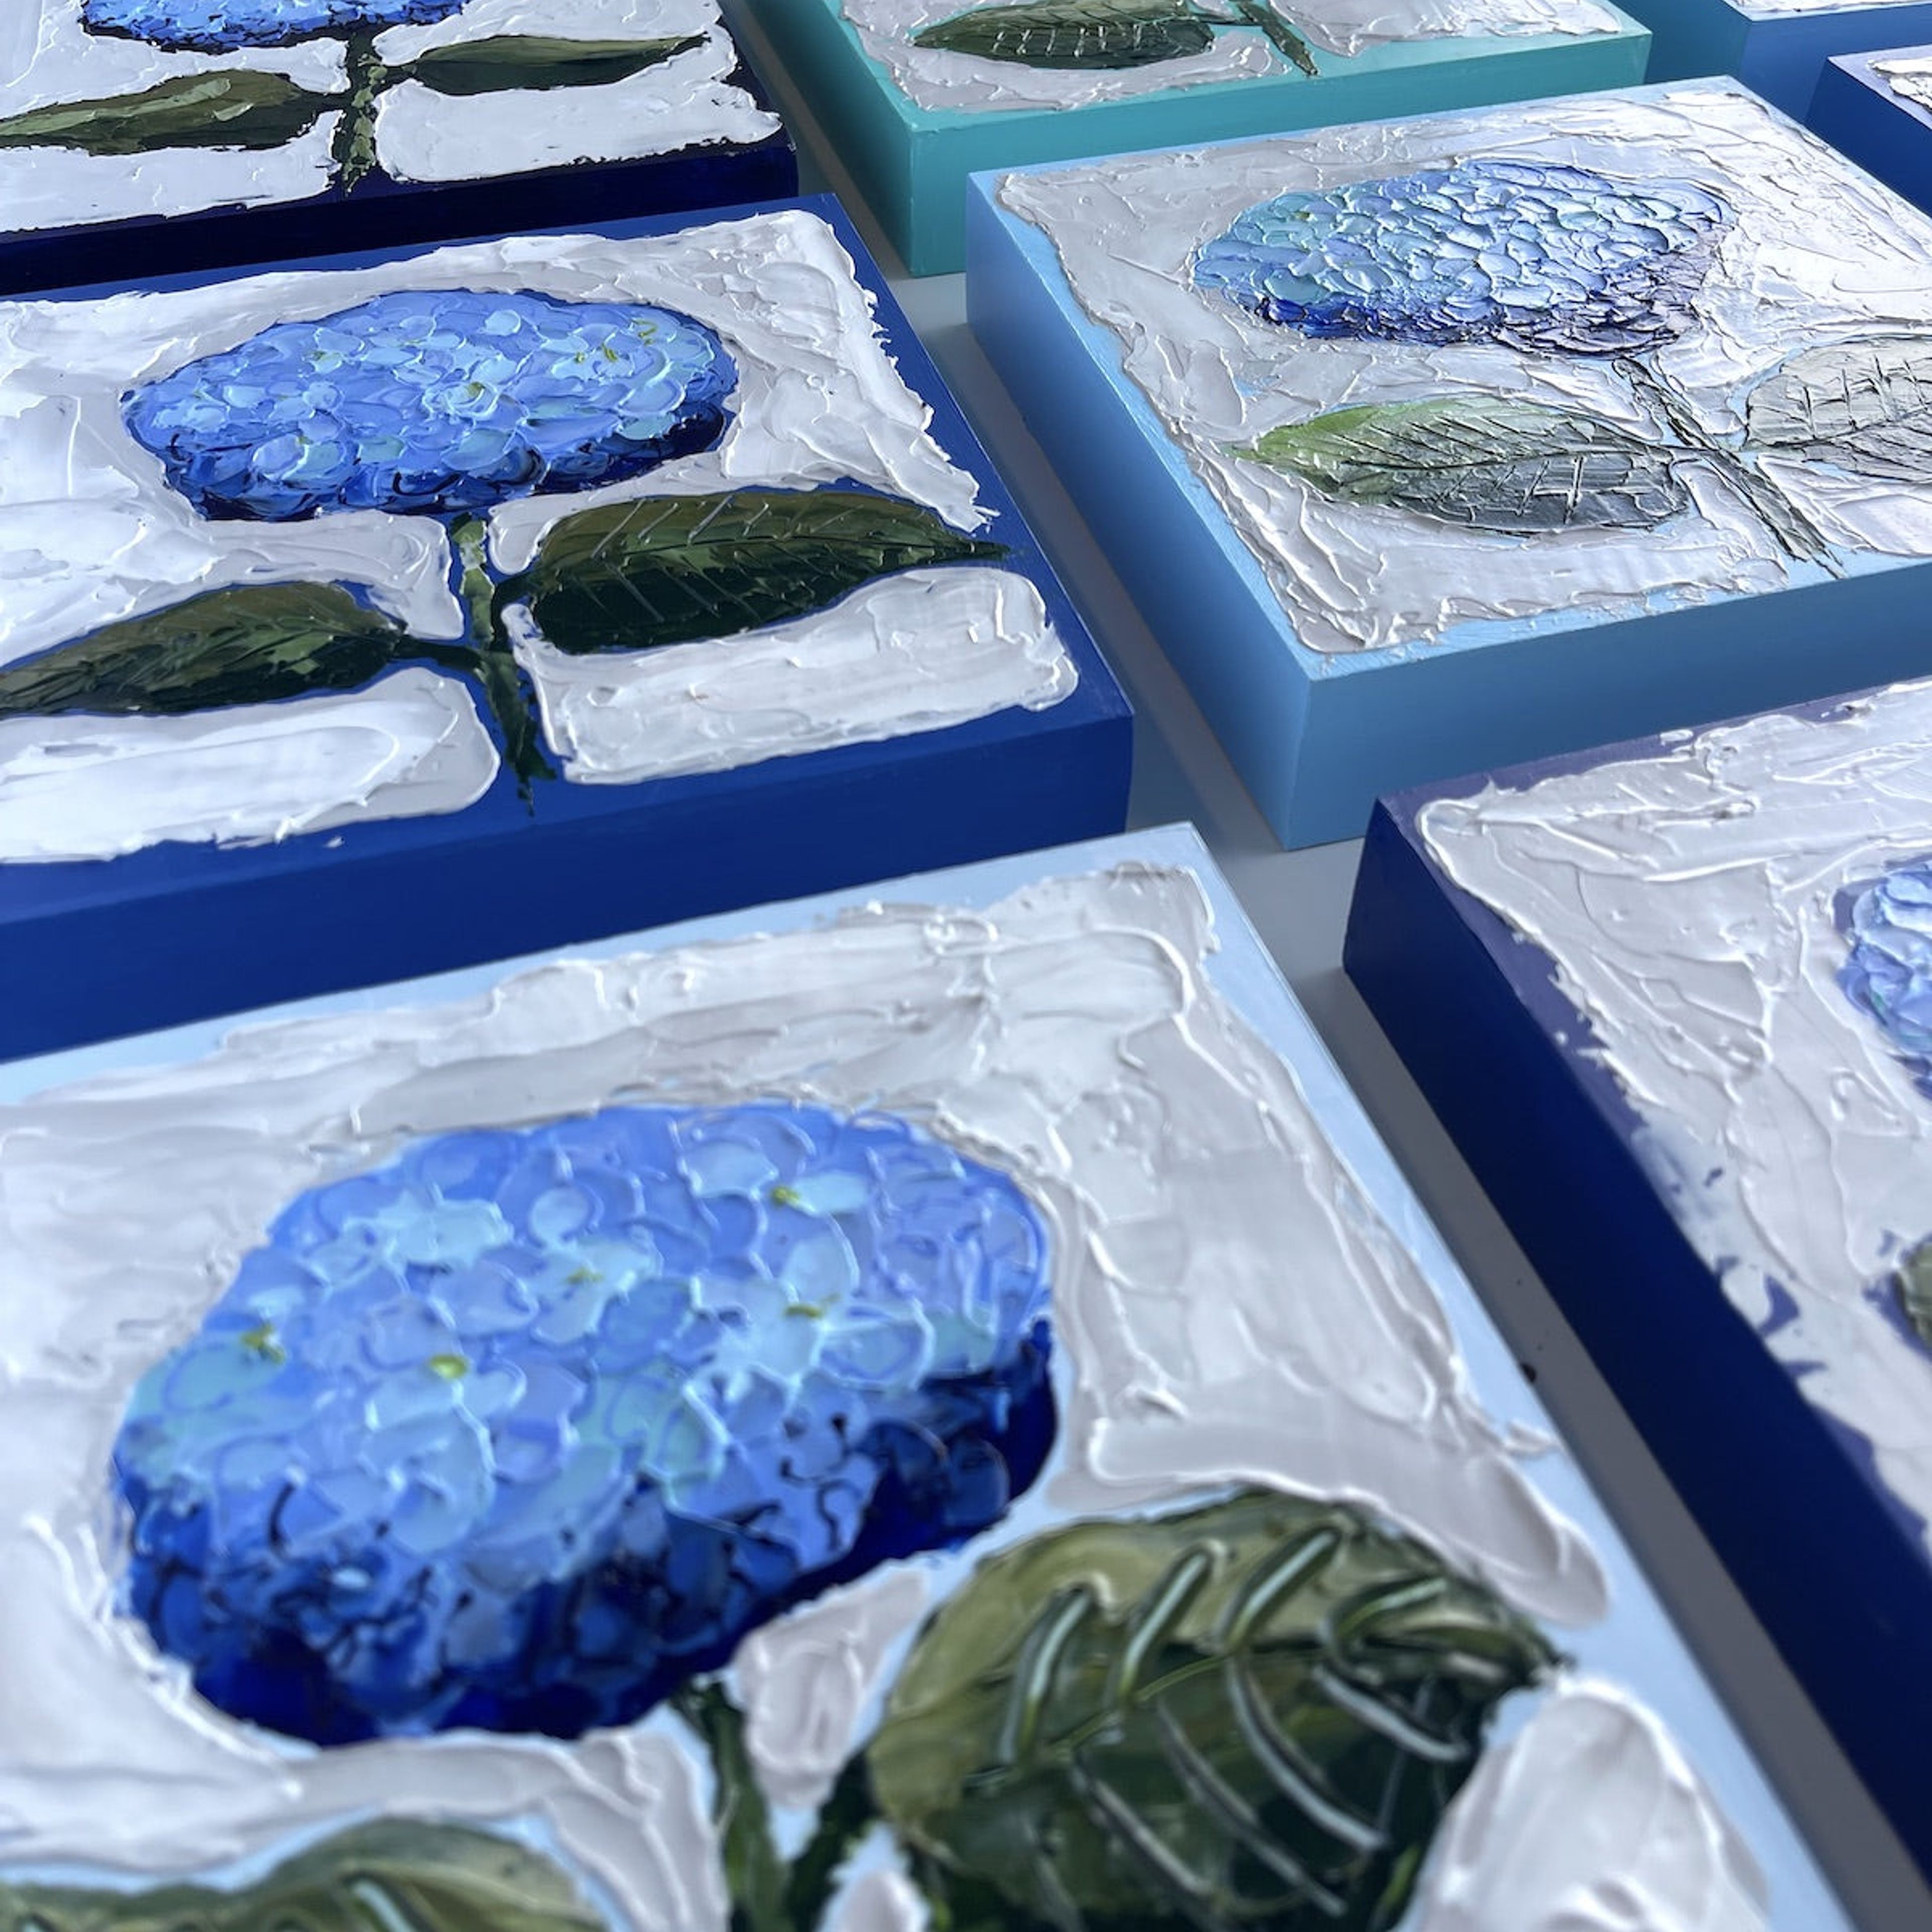 New Bloom 8 - 8x8" Hydrangea - Light Blue - Acrylic Painting on Panel